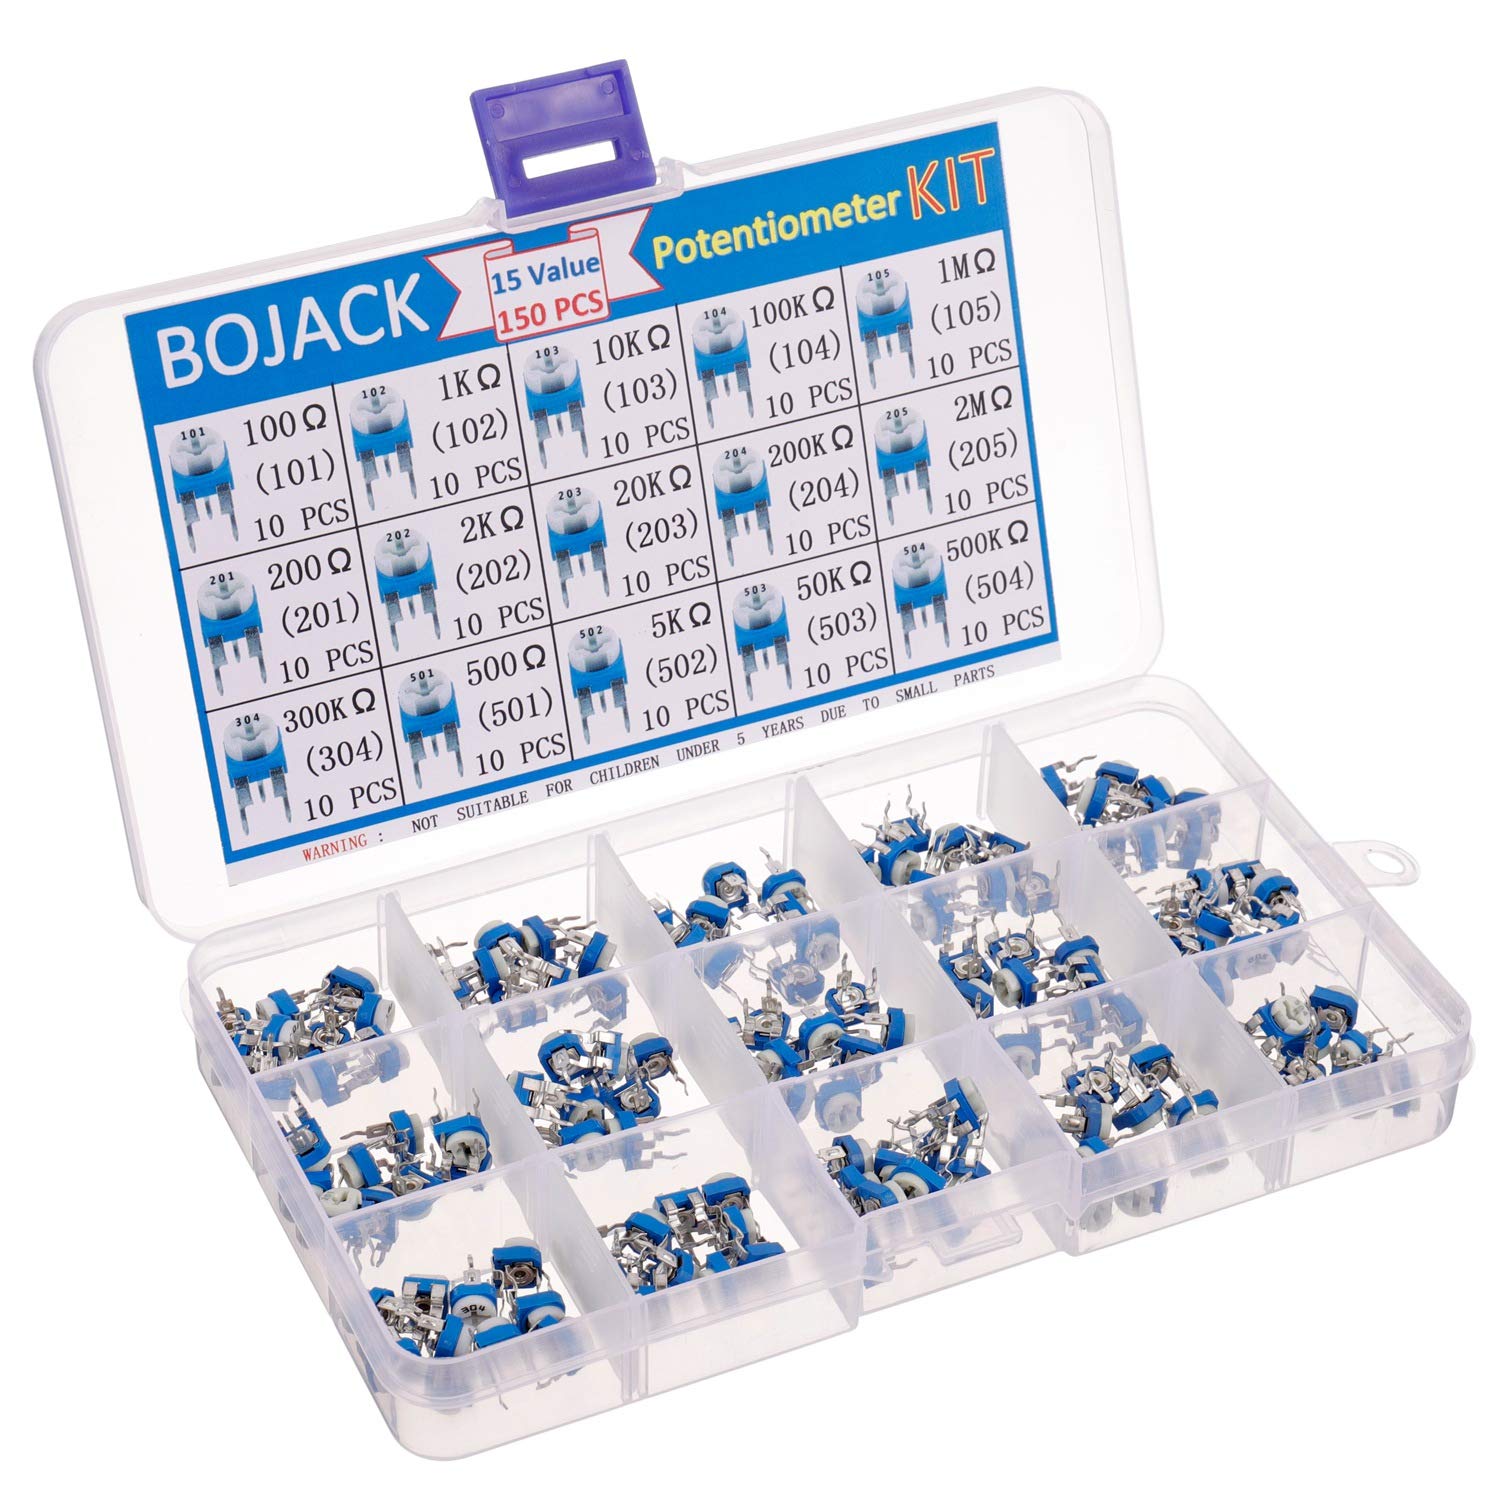 BOJACK 15 Values 150 pcs 100 Ohm 2M Ohm Variable Resistor 6mm Potentiometer Assortment Kit packag in a Clear Plastic Box 